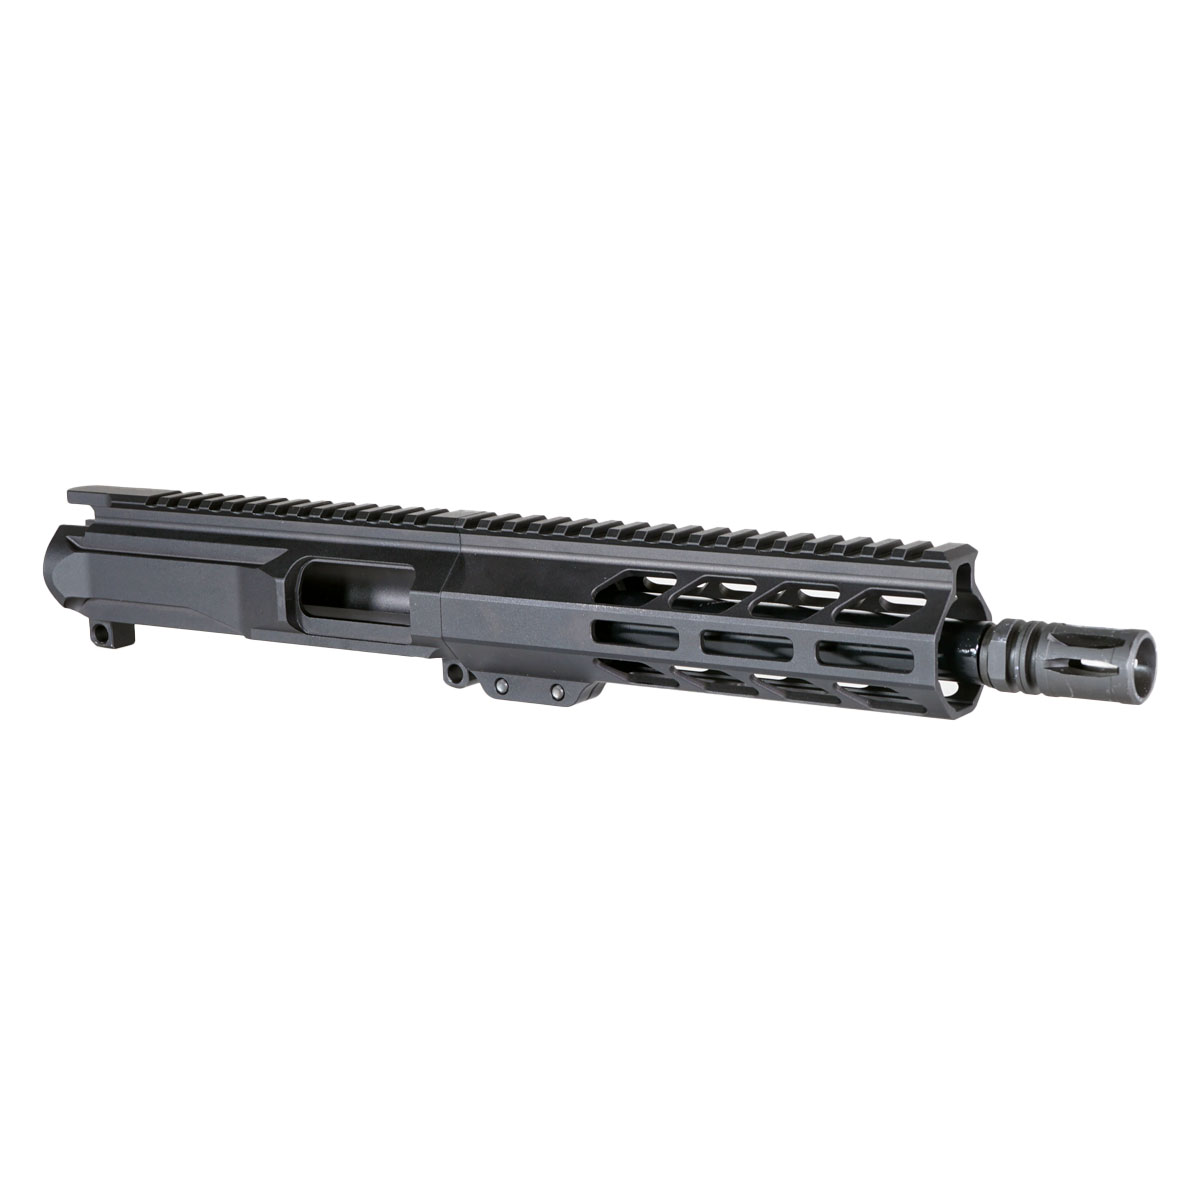 DDS 'Eternal Night Gen 2' 8.5-inch AR-15 9mm Nitride Pistol Upper Build Kit